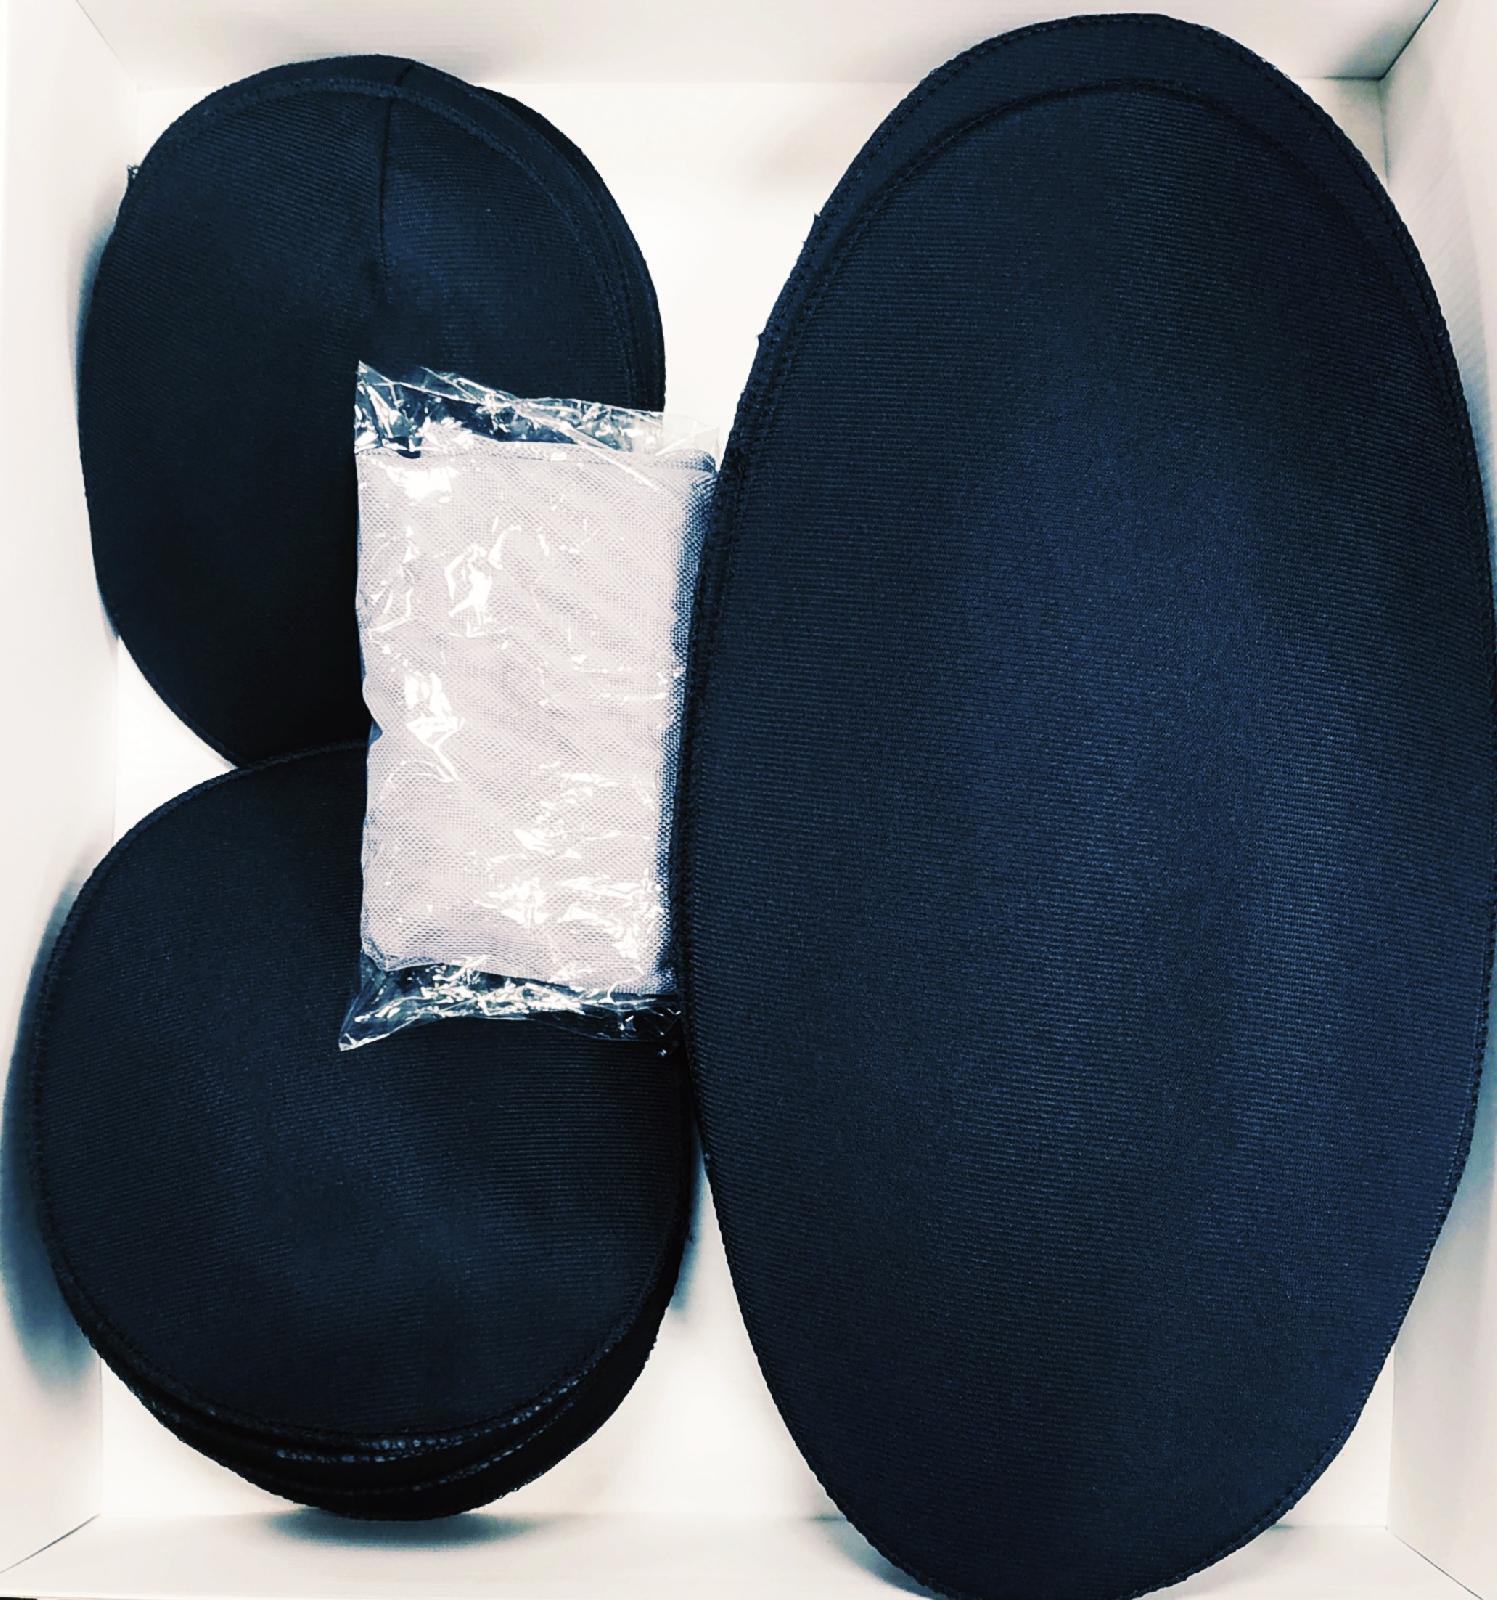 фото - Набор накладок Pro р.46-50 (цв. чёрный) для коррекции фигуры манекена